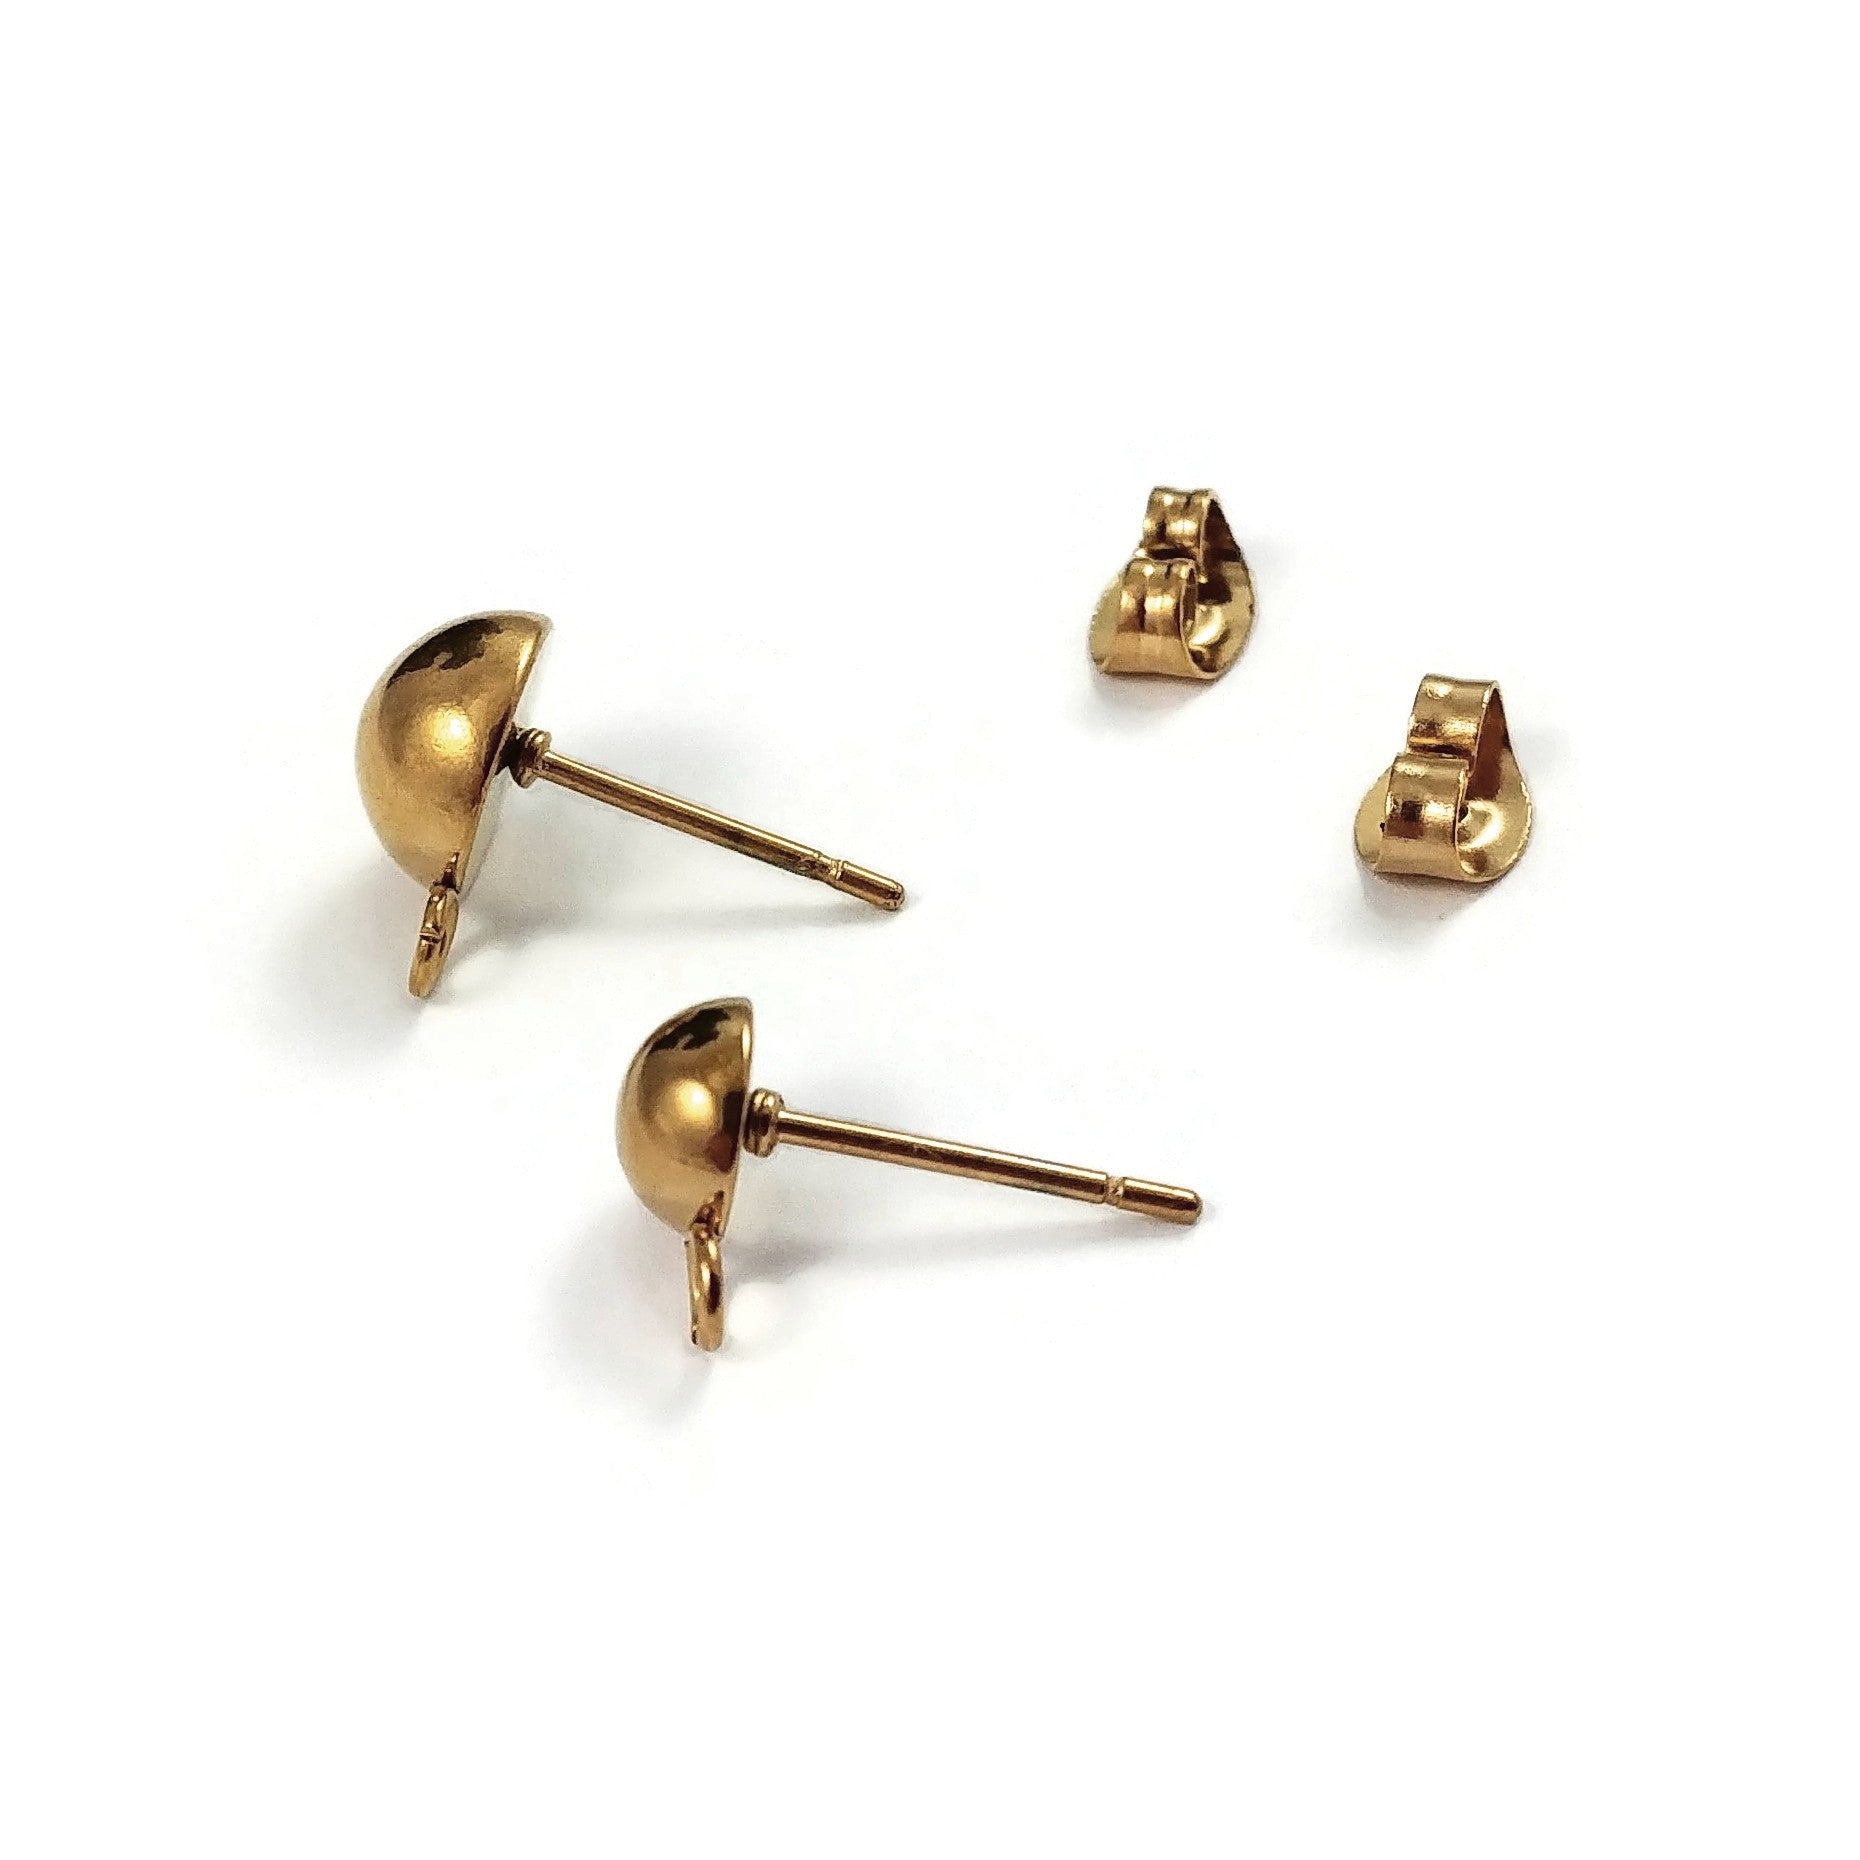 10pcs Stainless Steel Earring Post, Earstud, 6 or 8mm Half Ball head, with loop, Hypoallergenic